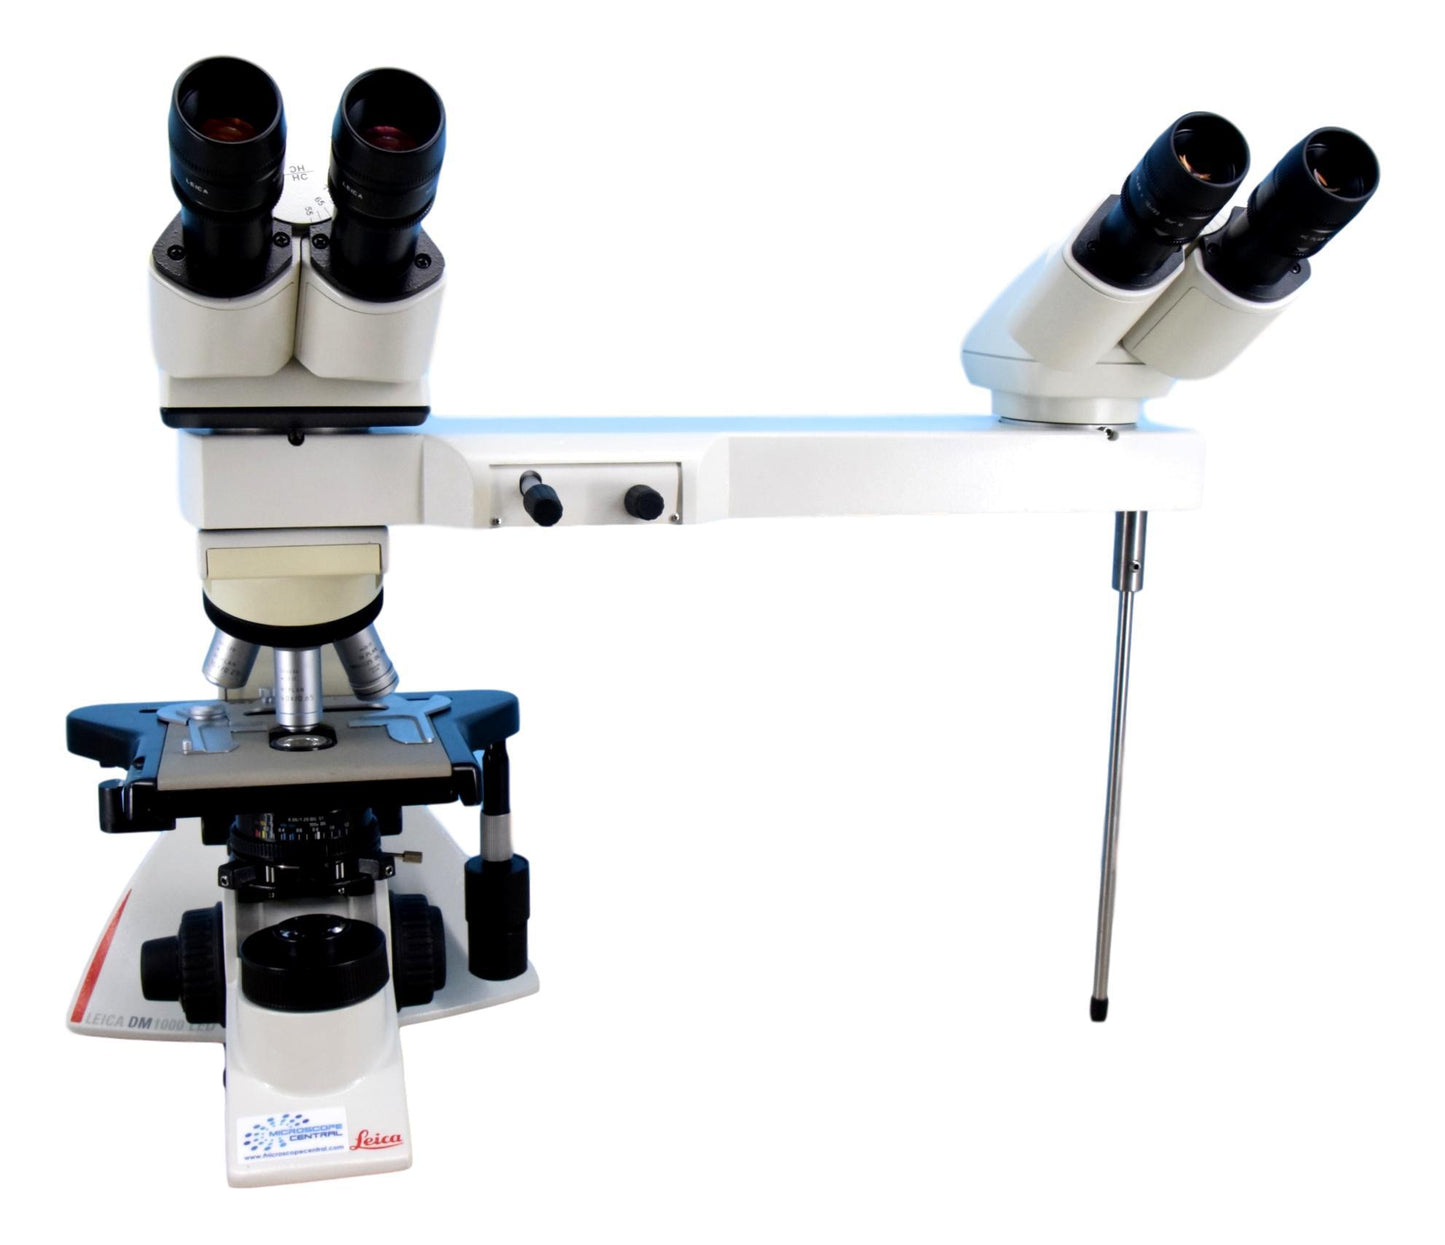 Leica DM1000 Dual Viewing Microscope - Binocular Head